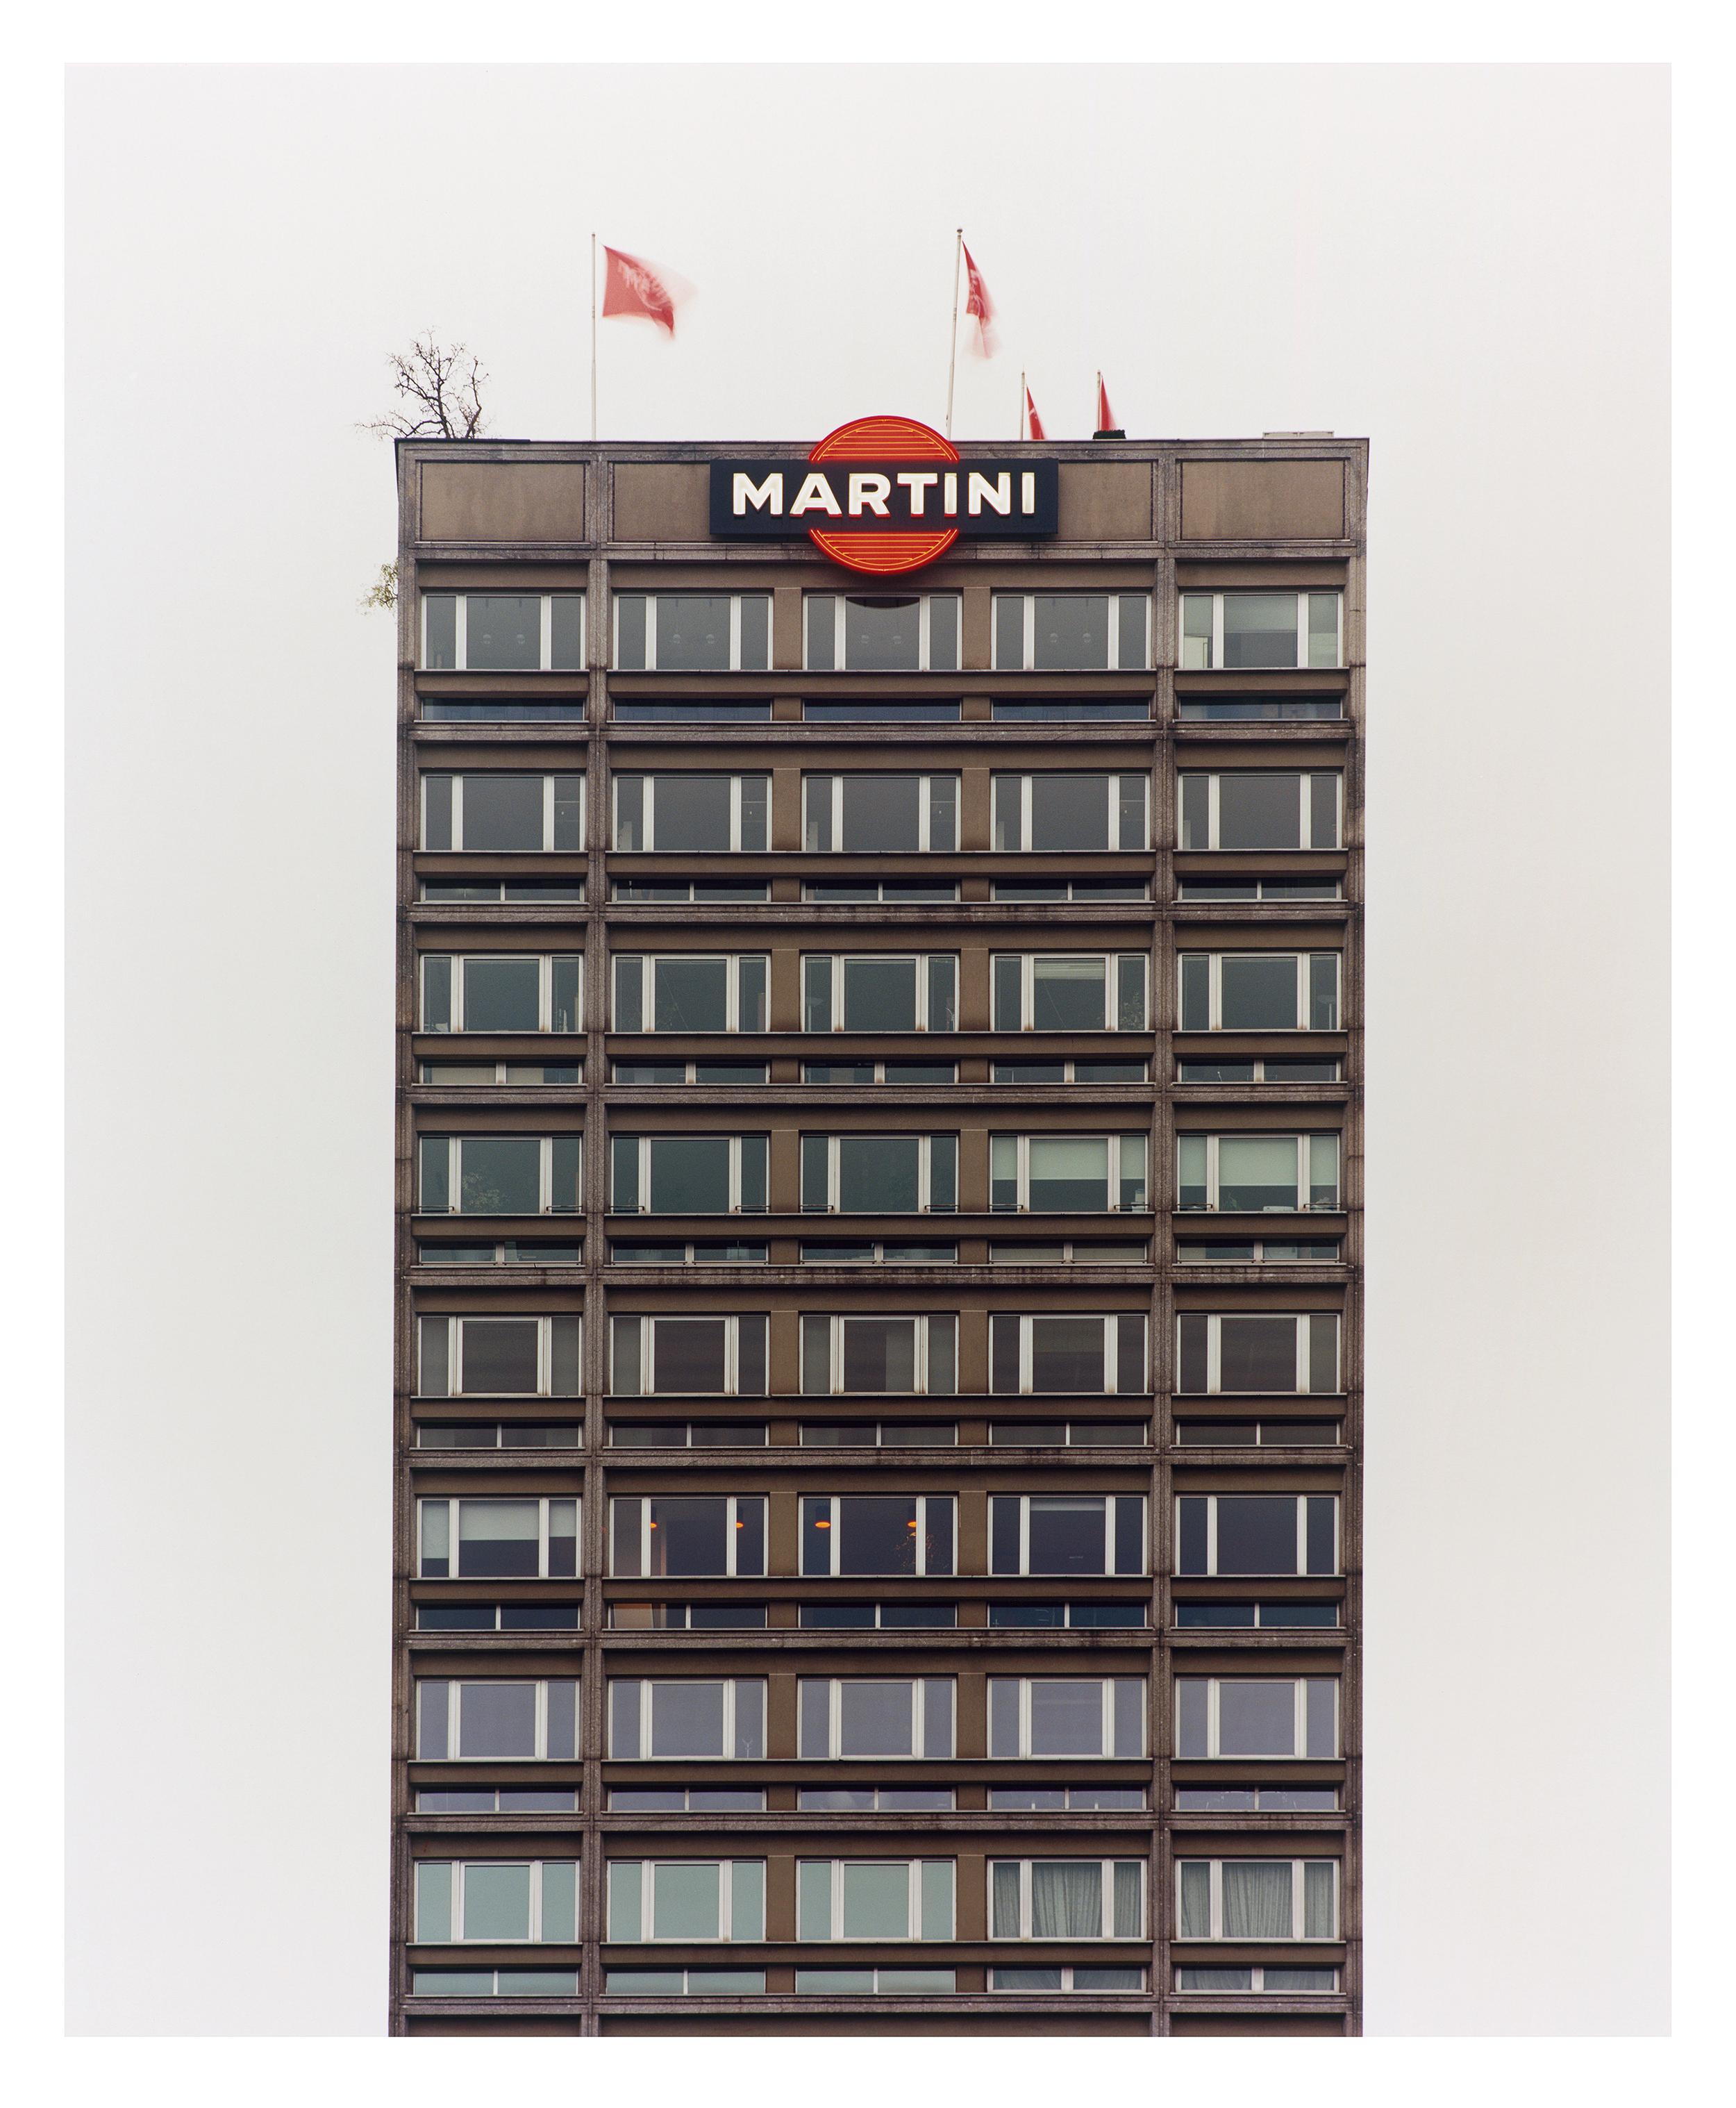 Richard Heeps Color Photograph – Grauer Martini, Mailand – Architekturfotografie in Farbfotografie